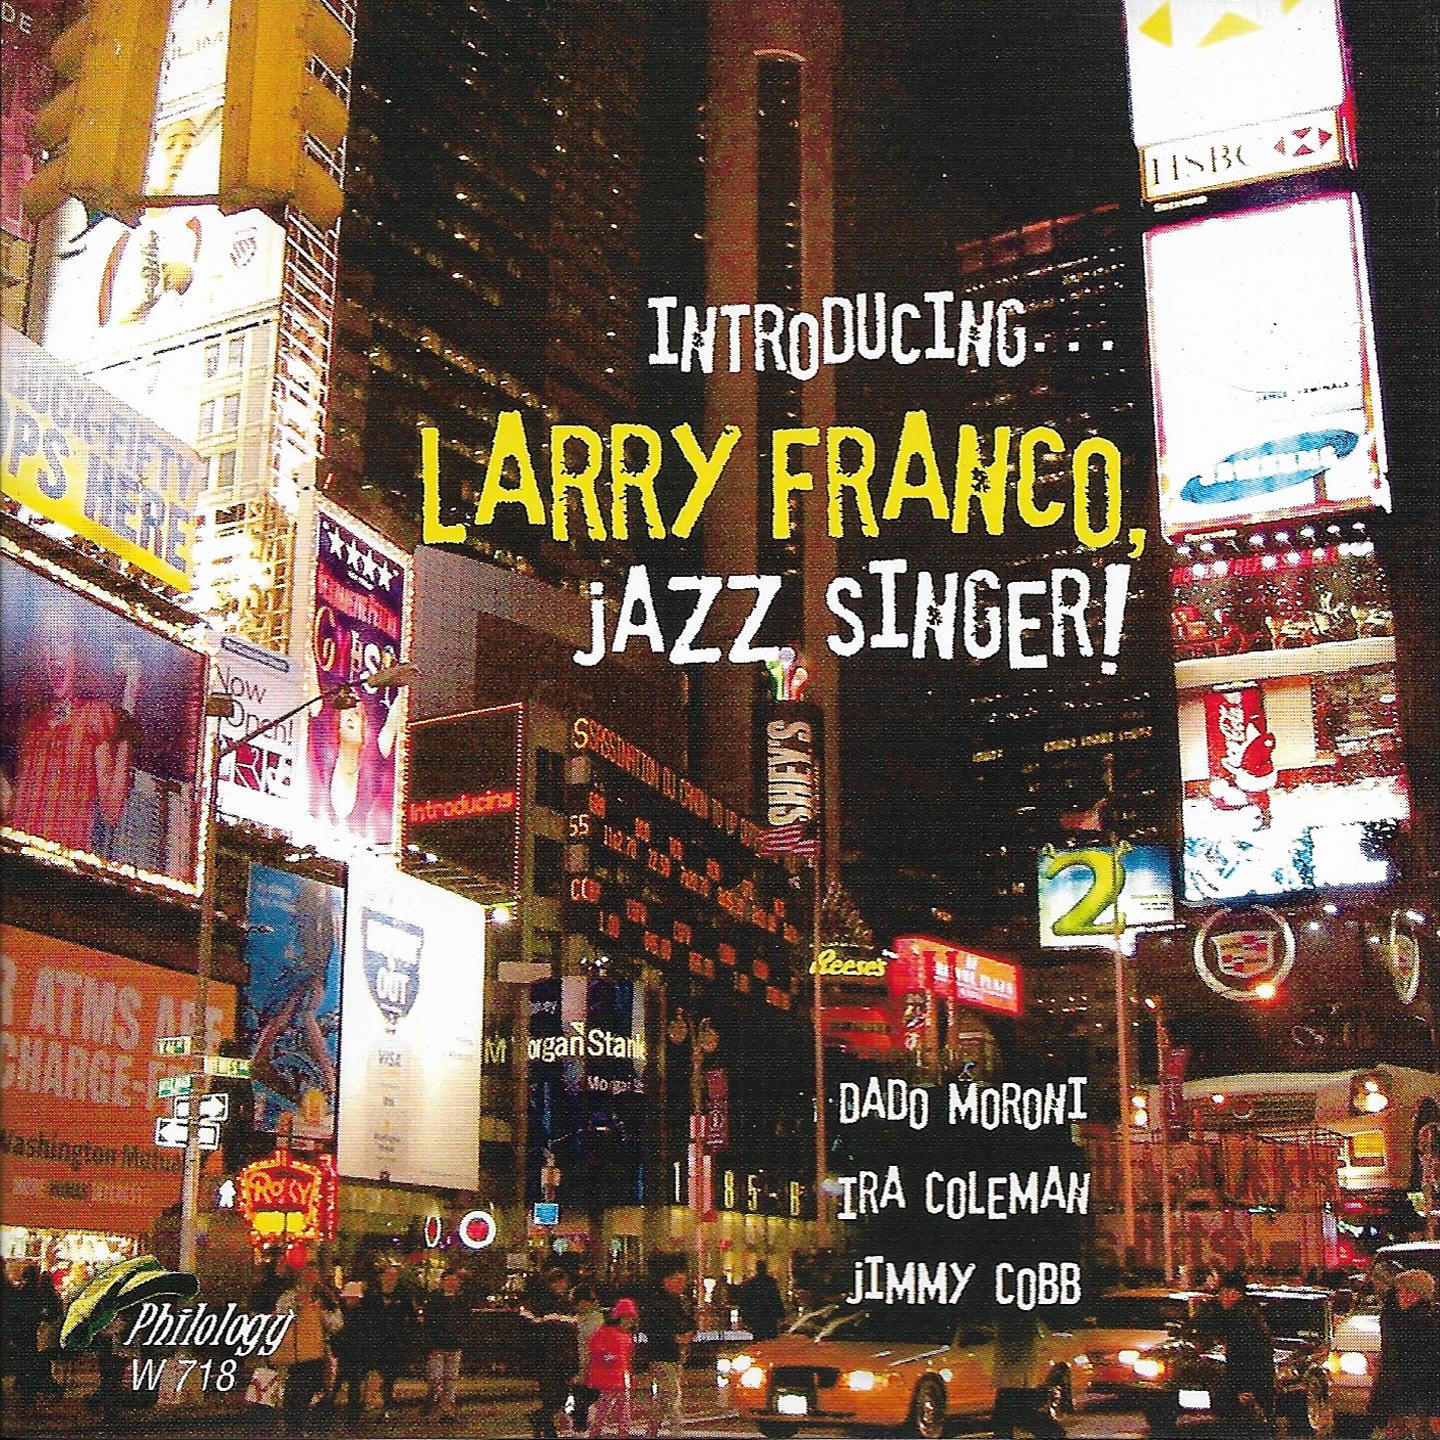 Introducing... Larry Franco, Jazz Singer!